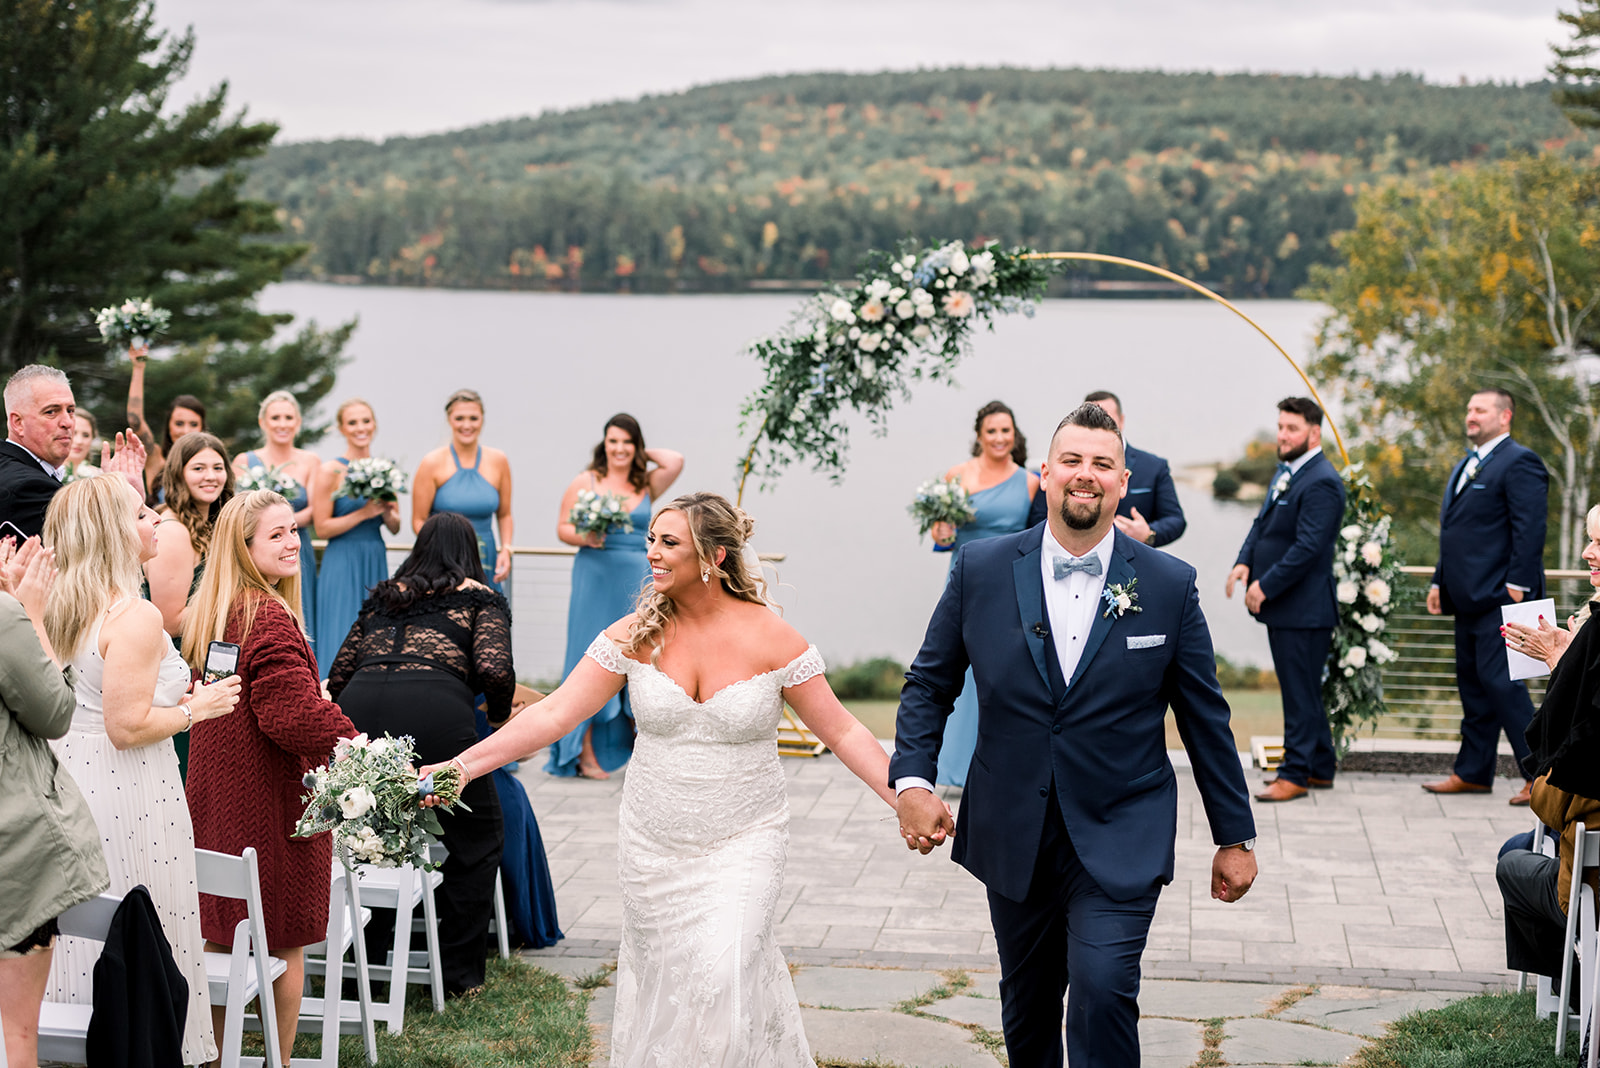 A Barn wedding at Bear Mountain Inn in Maine overlooking Bear Pond. 

Molly Breton + Co.